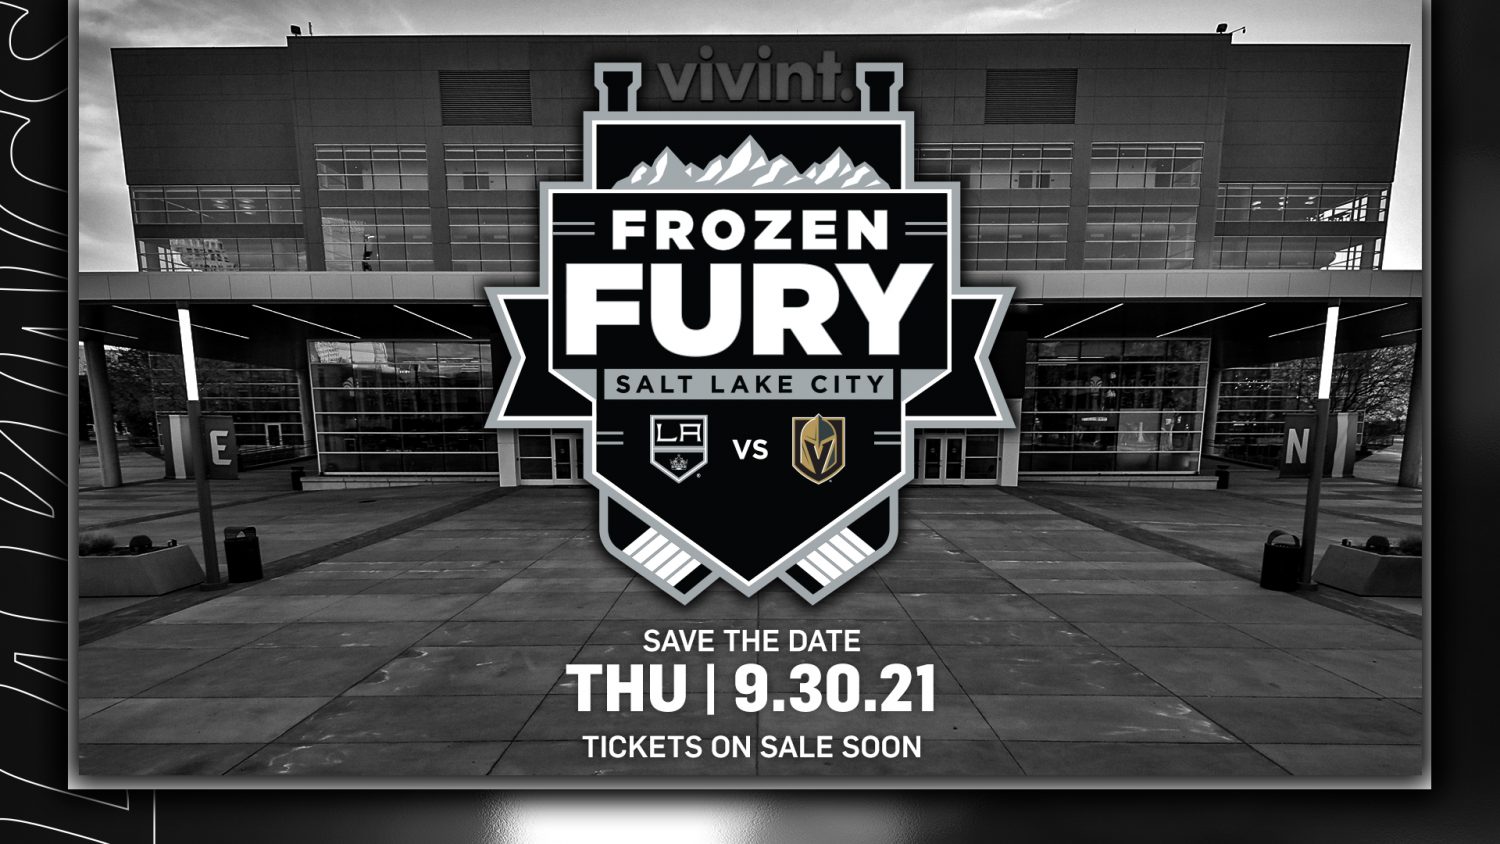 LA Kings beat Vegas Golden Knights in Frozen Fury at Vivint Arena, 3-1